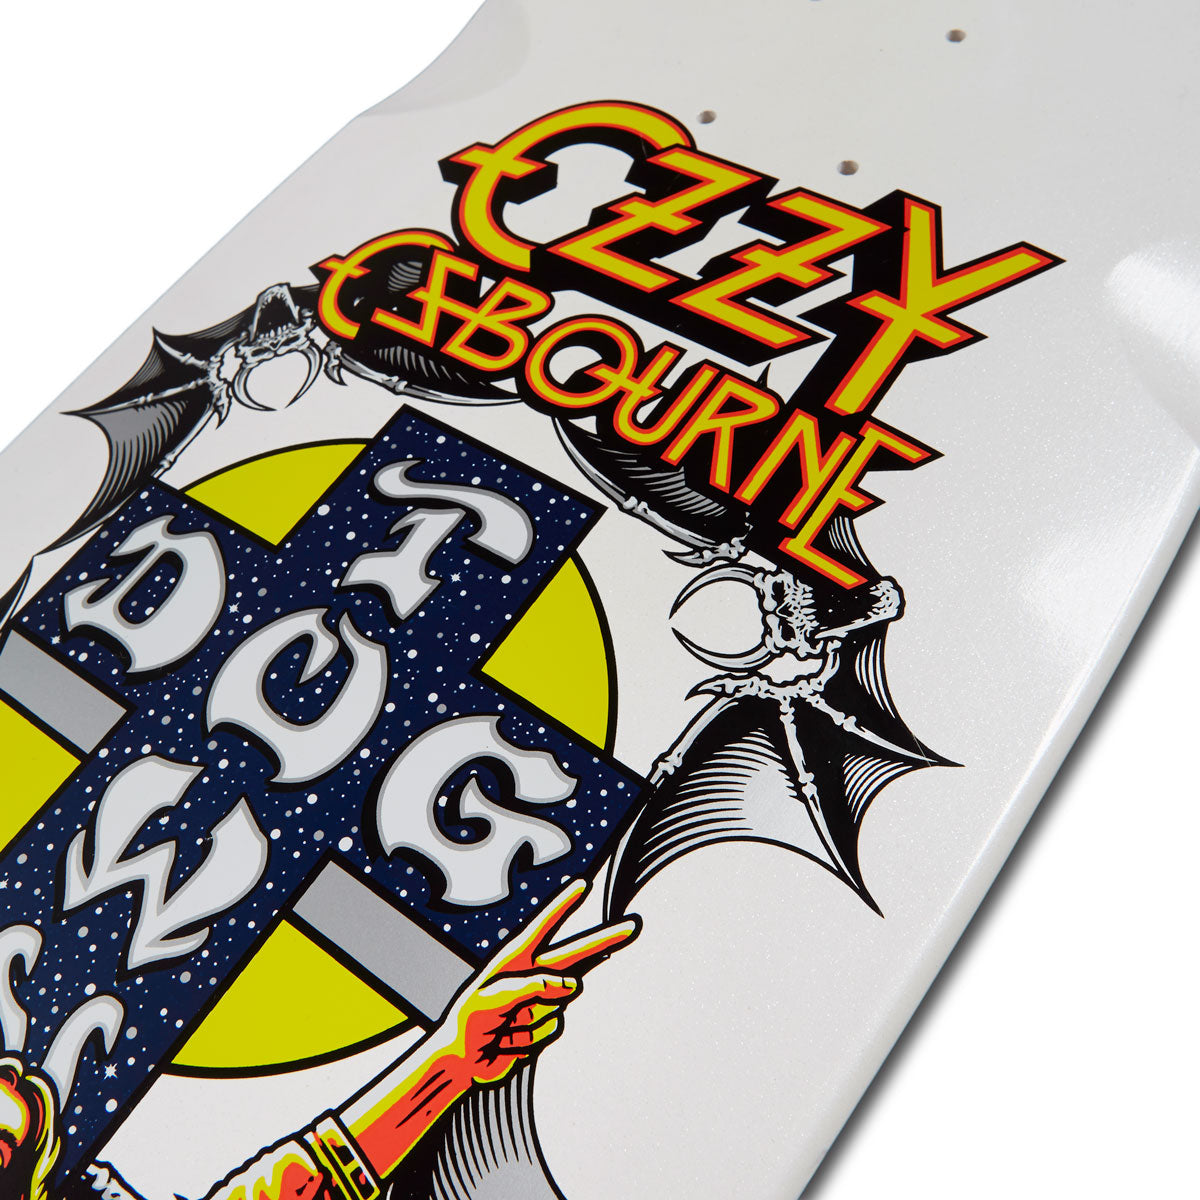 Dogtown x Ozzy Osbourne Skateboard Deck - Pearl White - 10.125